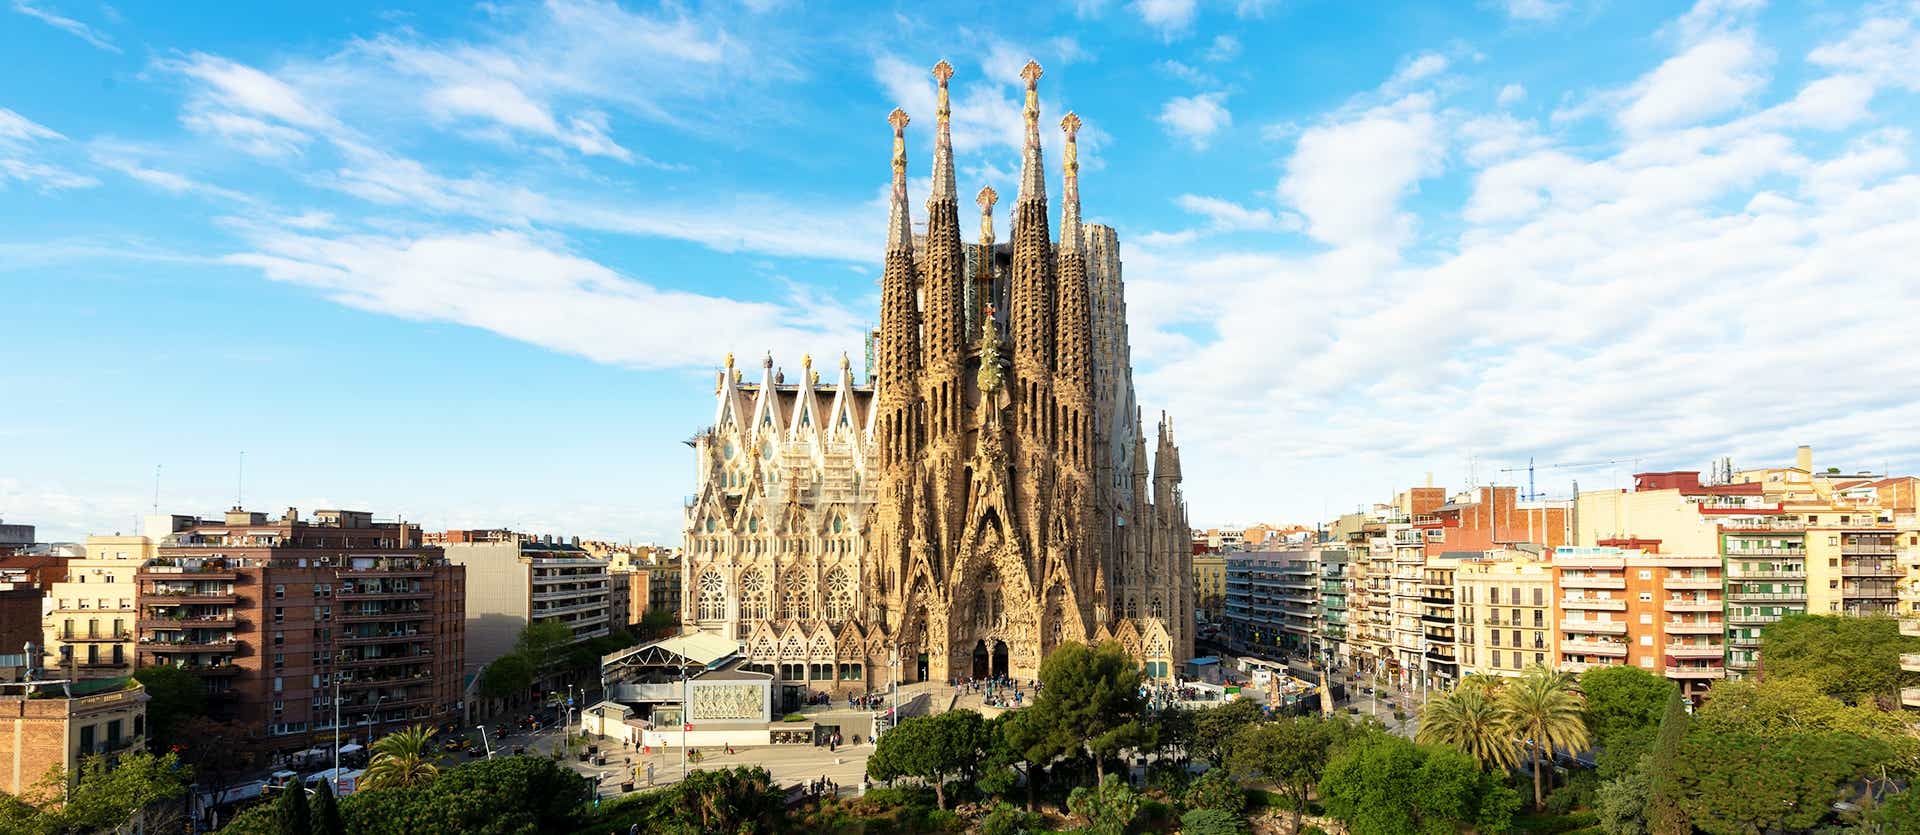 Sagrada Família <span class="iconos separador"></span> Barcelona <span class="iconos separador"></span> Spain